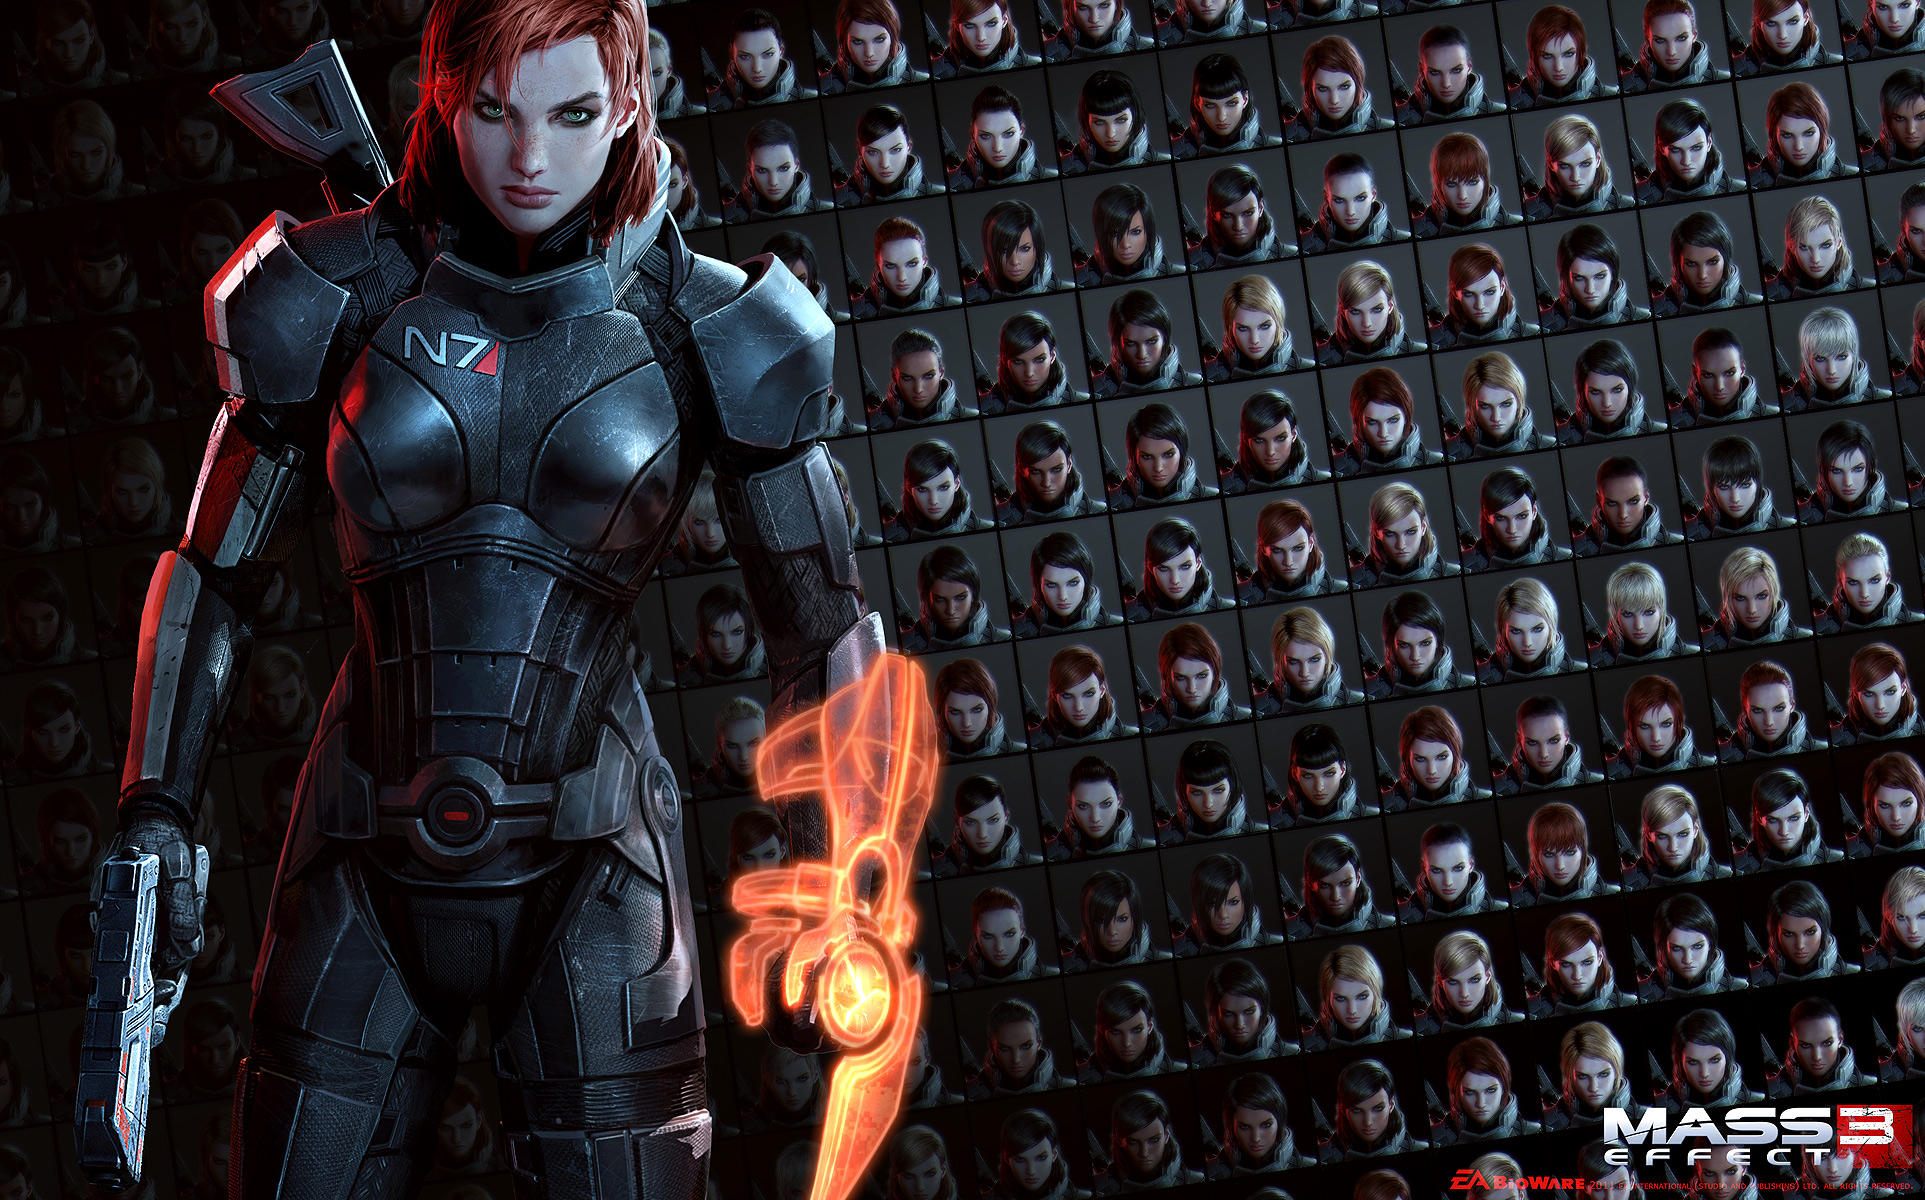 Android female protagonist games. Масс эффект 3 обои. Джейсон Шепард. BIOWARE игры. Mass Effect Dragon age.